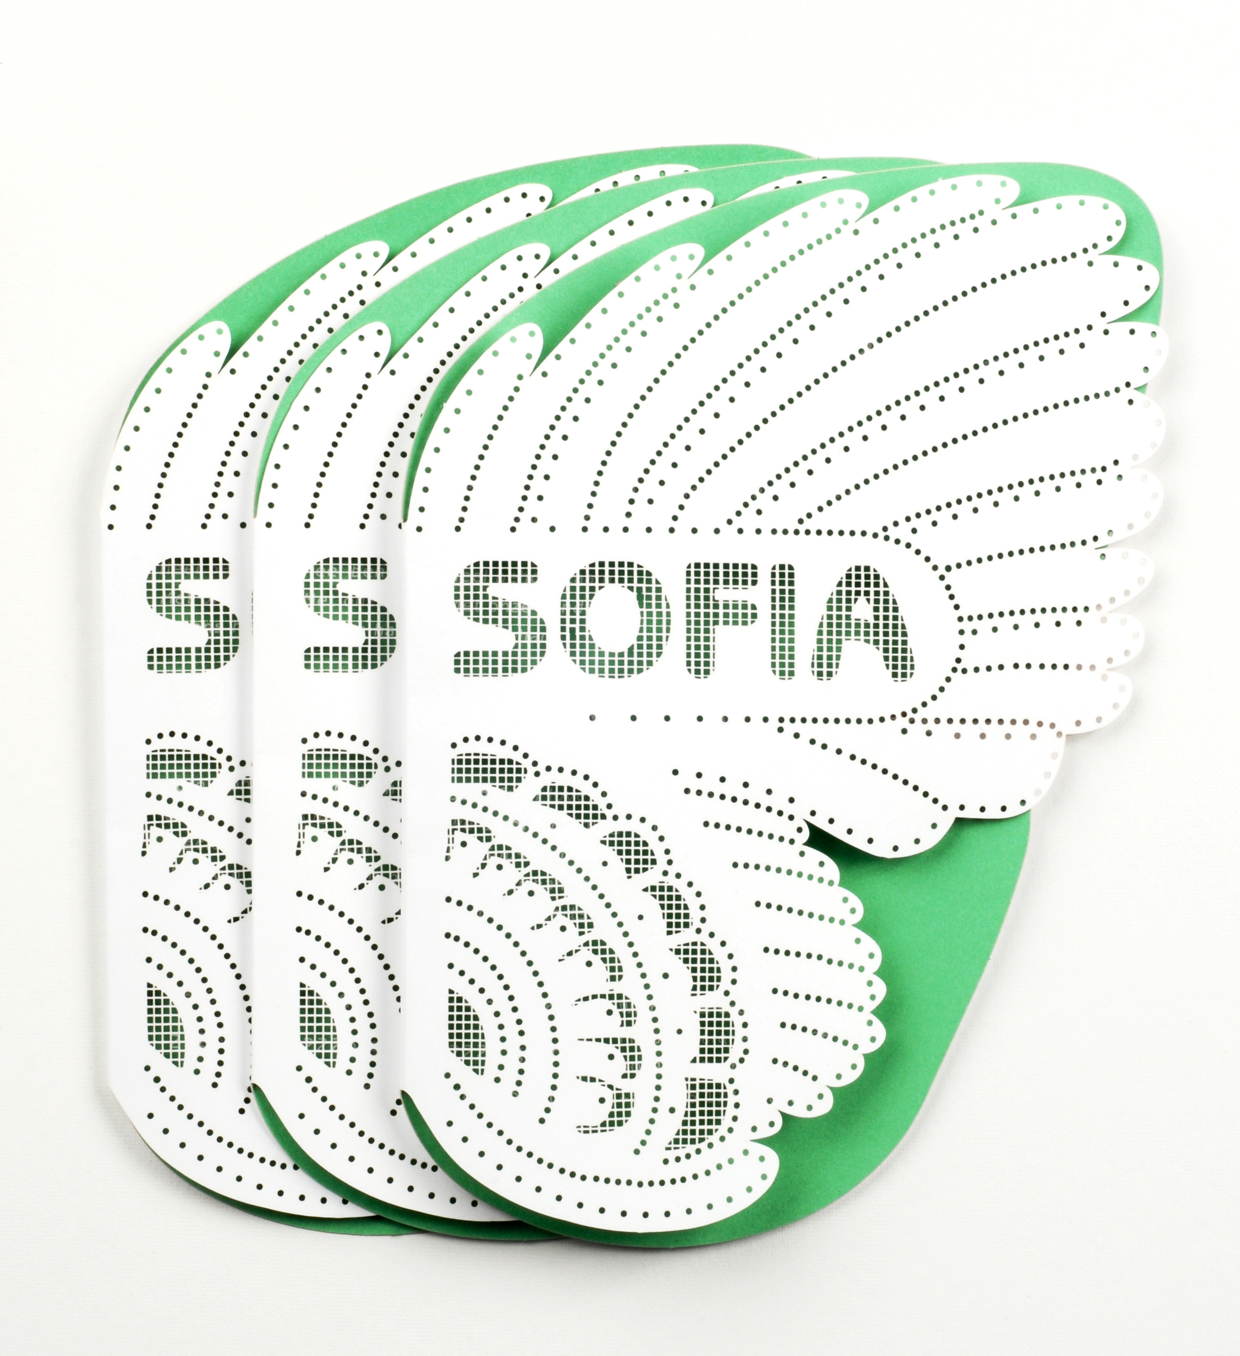 Sofia创意两折页平面广告